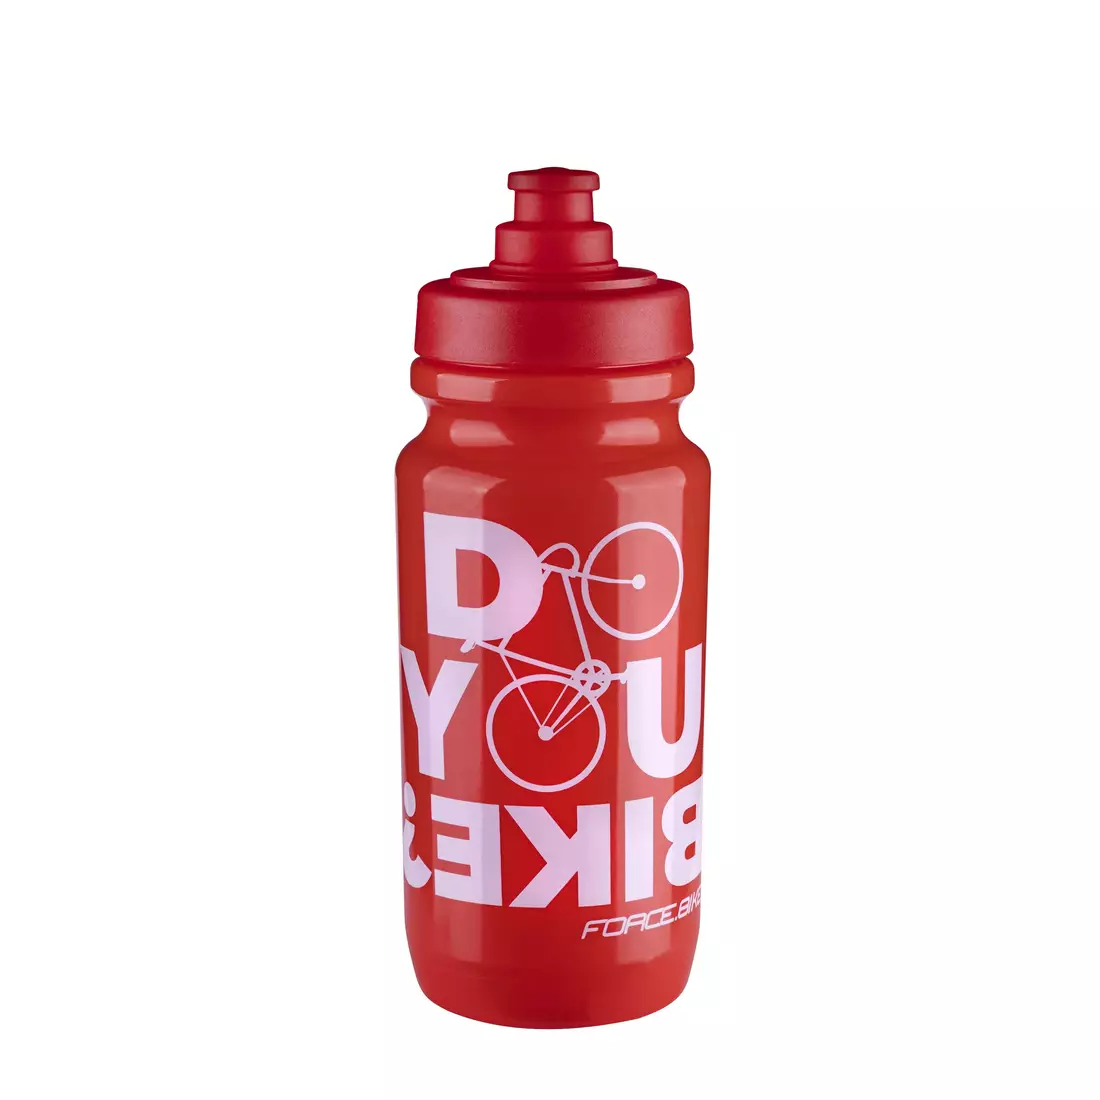 FORCE Fahrrad Wasserflasche BIKE 0,5L red 250910